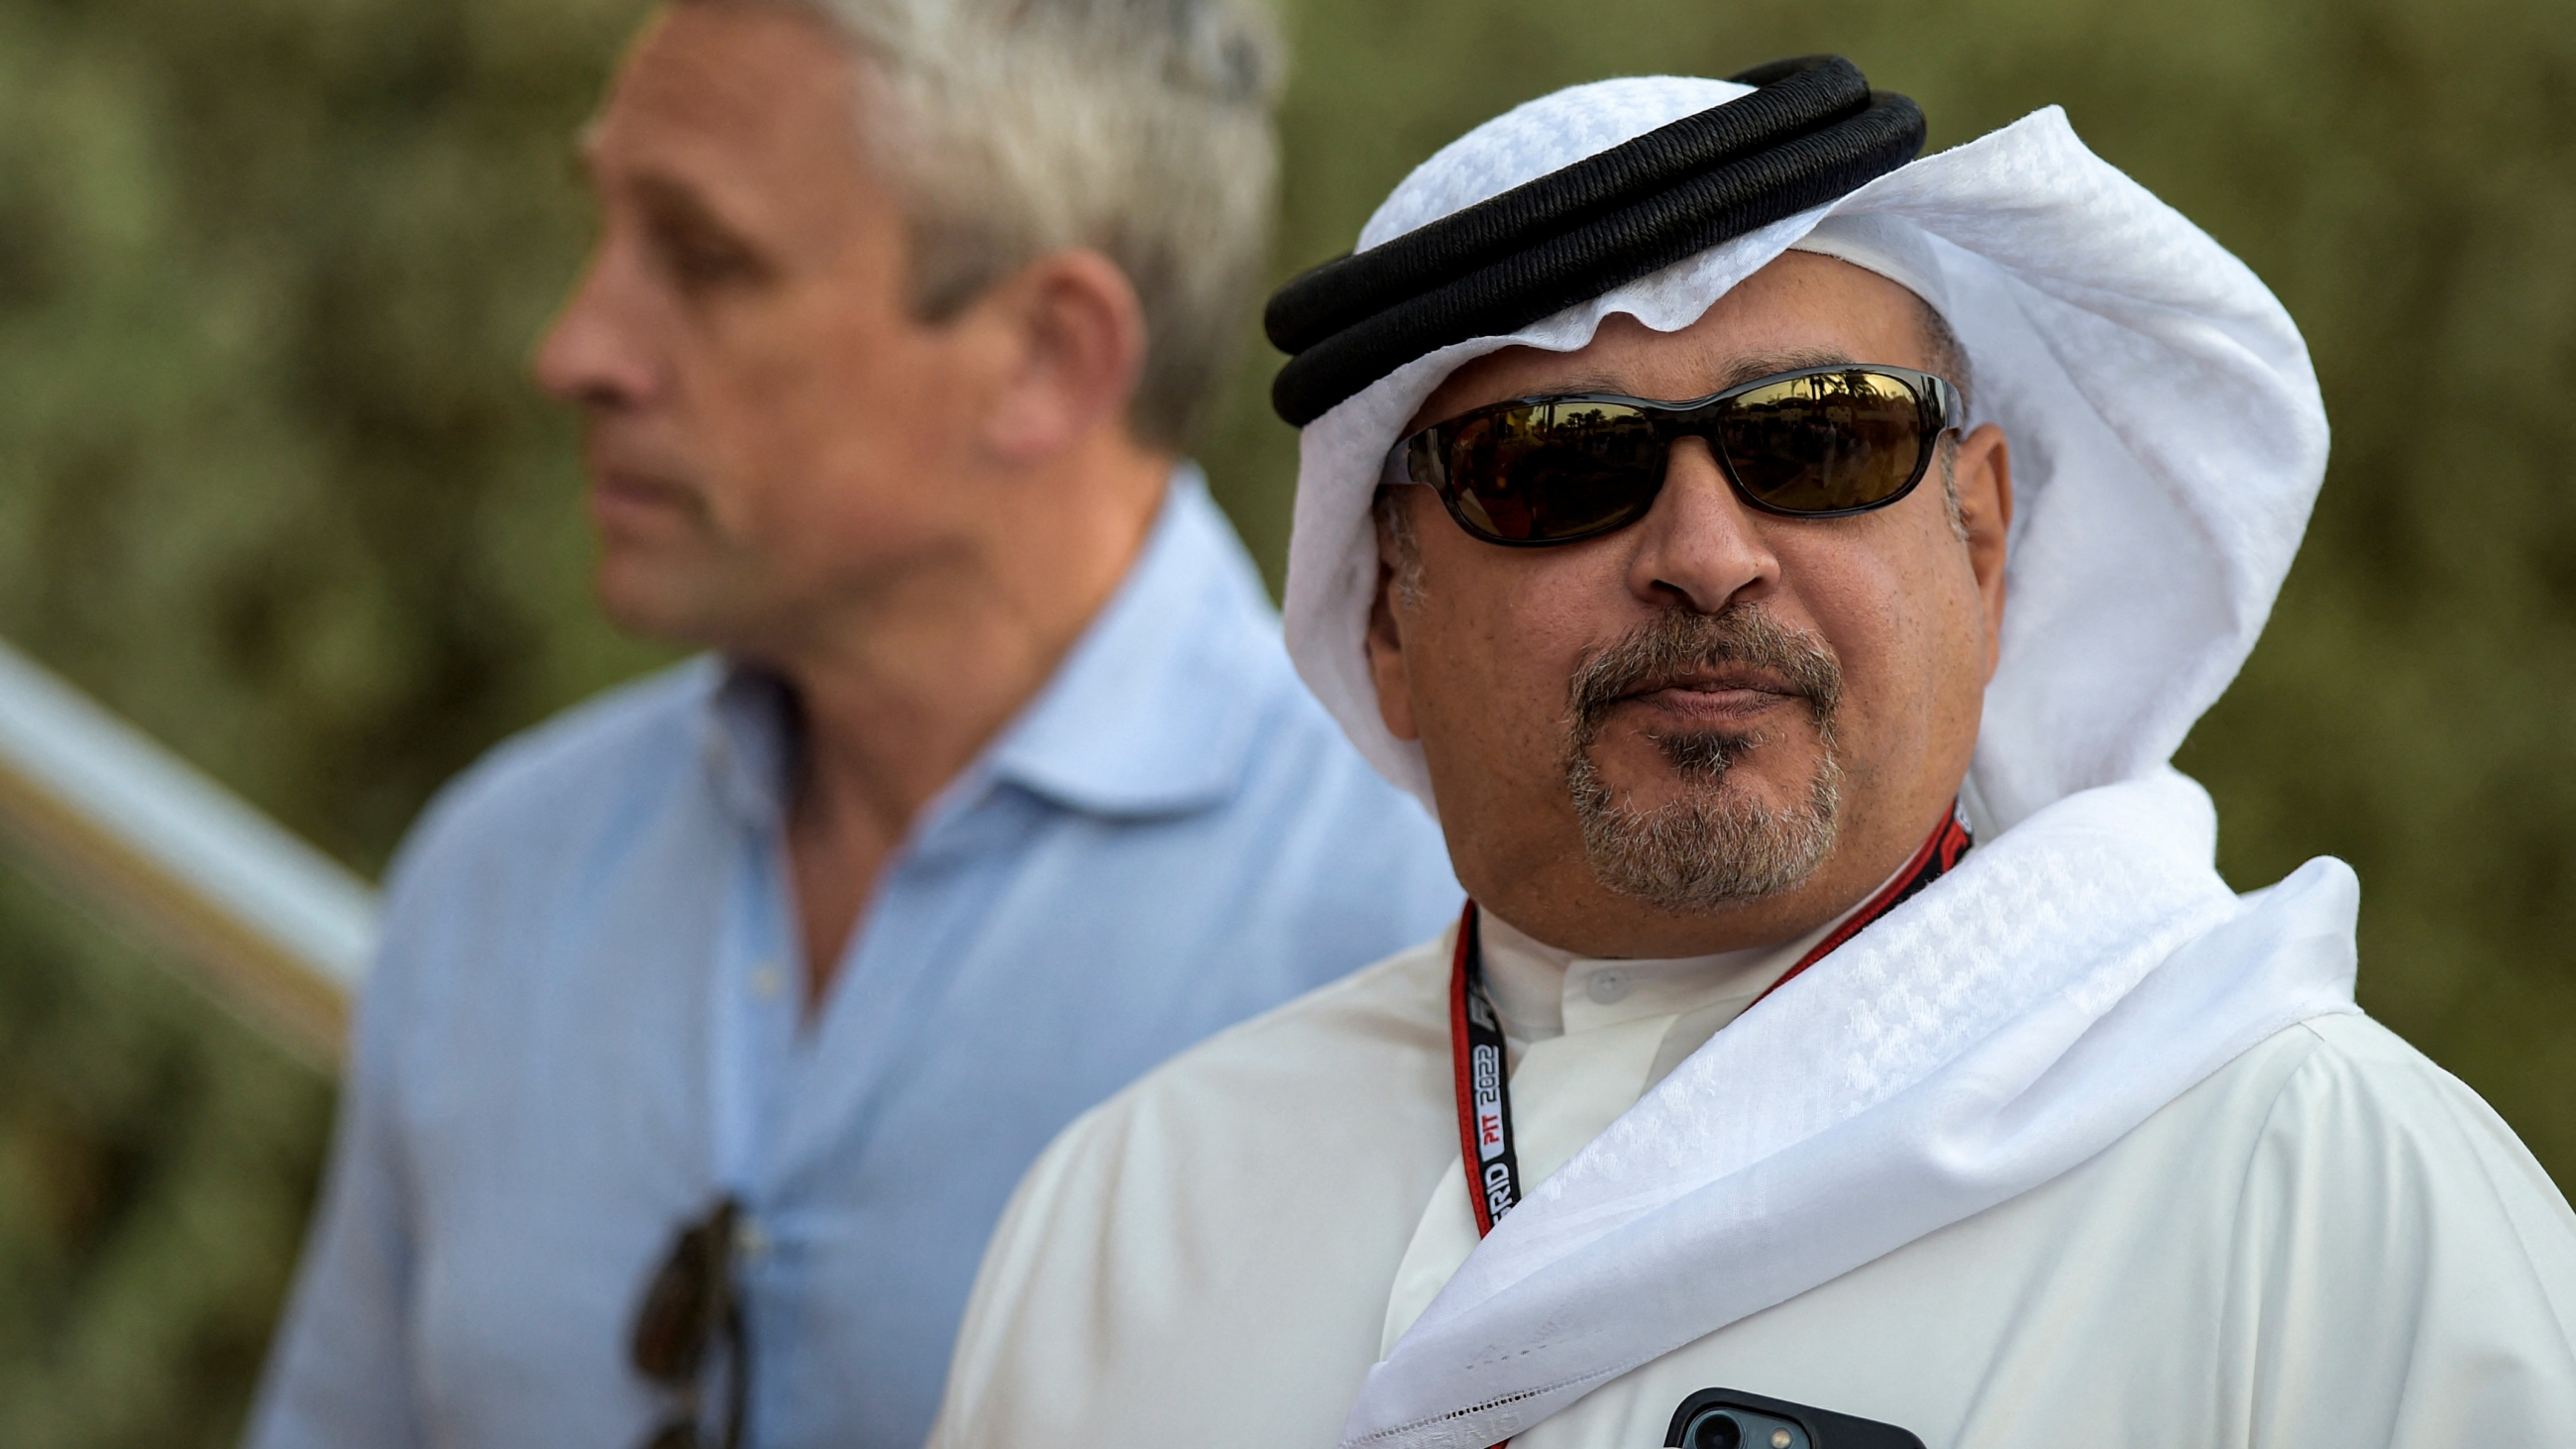 Bahraini Crown Prince and Prime Minister Salman bin Hamad Al-Khalifa attend the Formula One Grand Prix in Bahrain on 18 March 2022 (AFP)